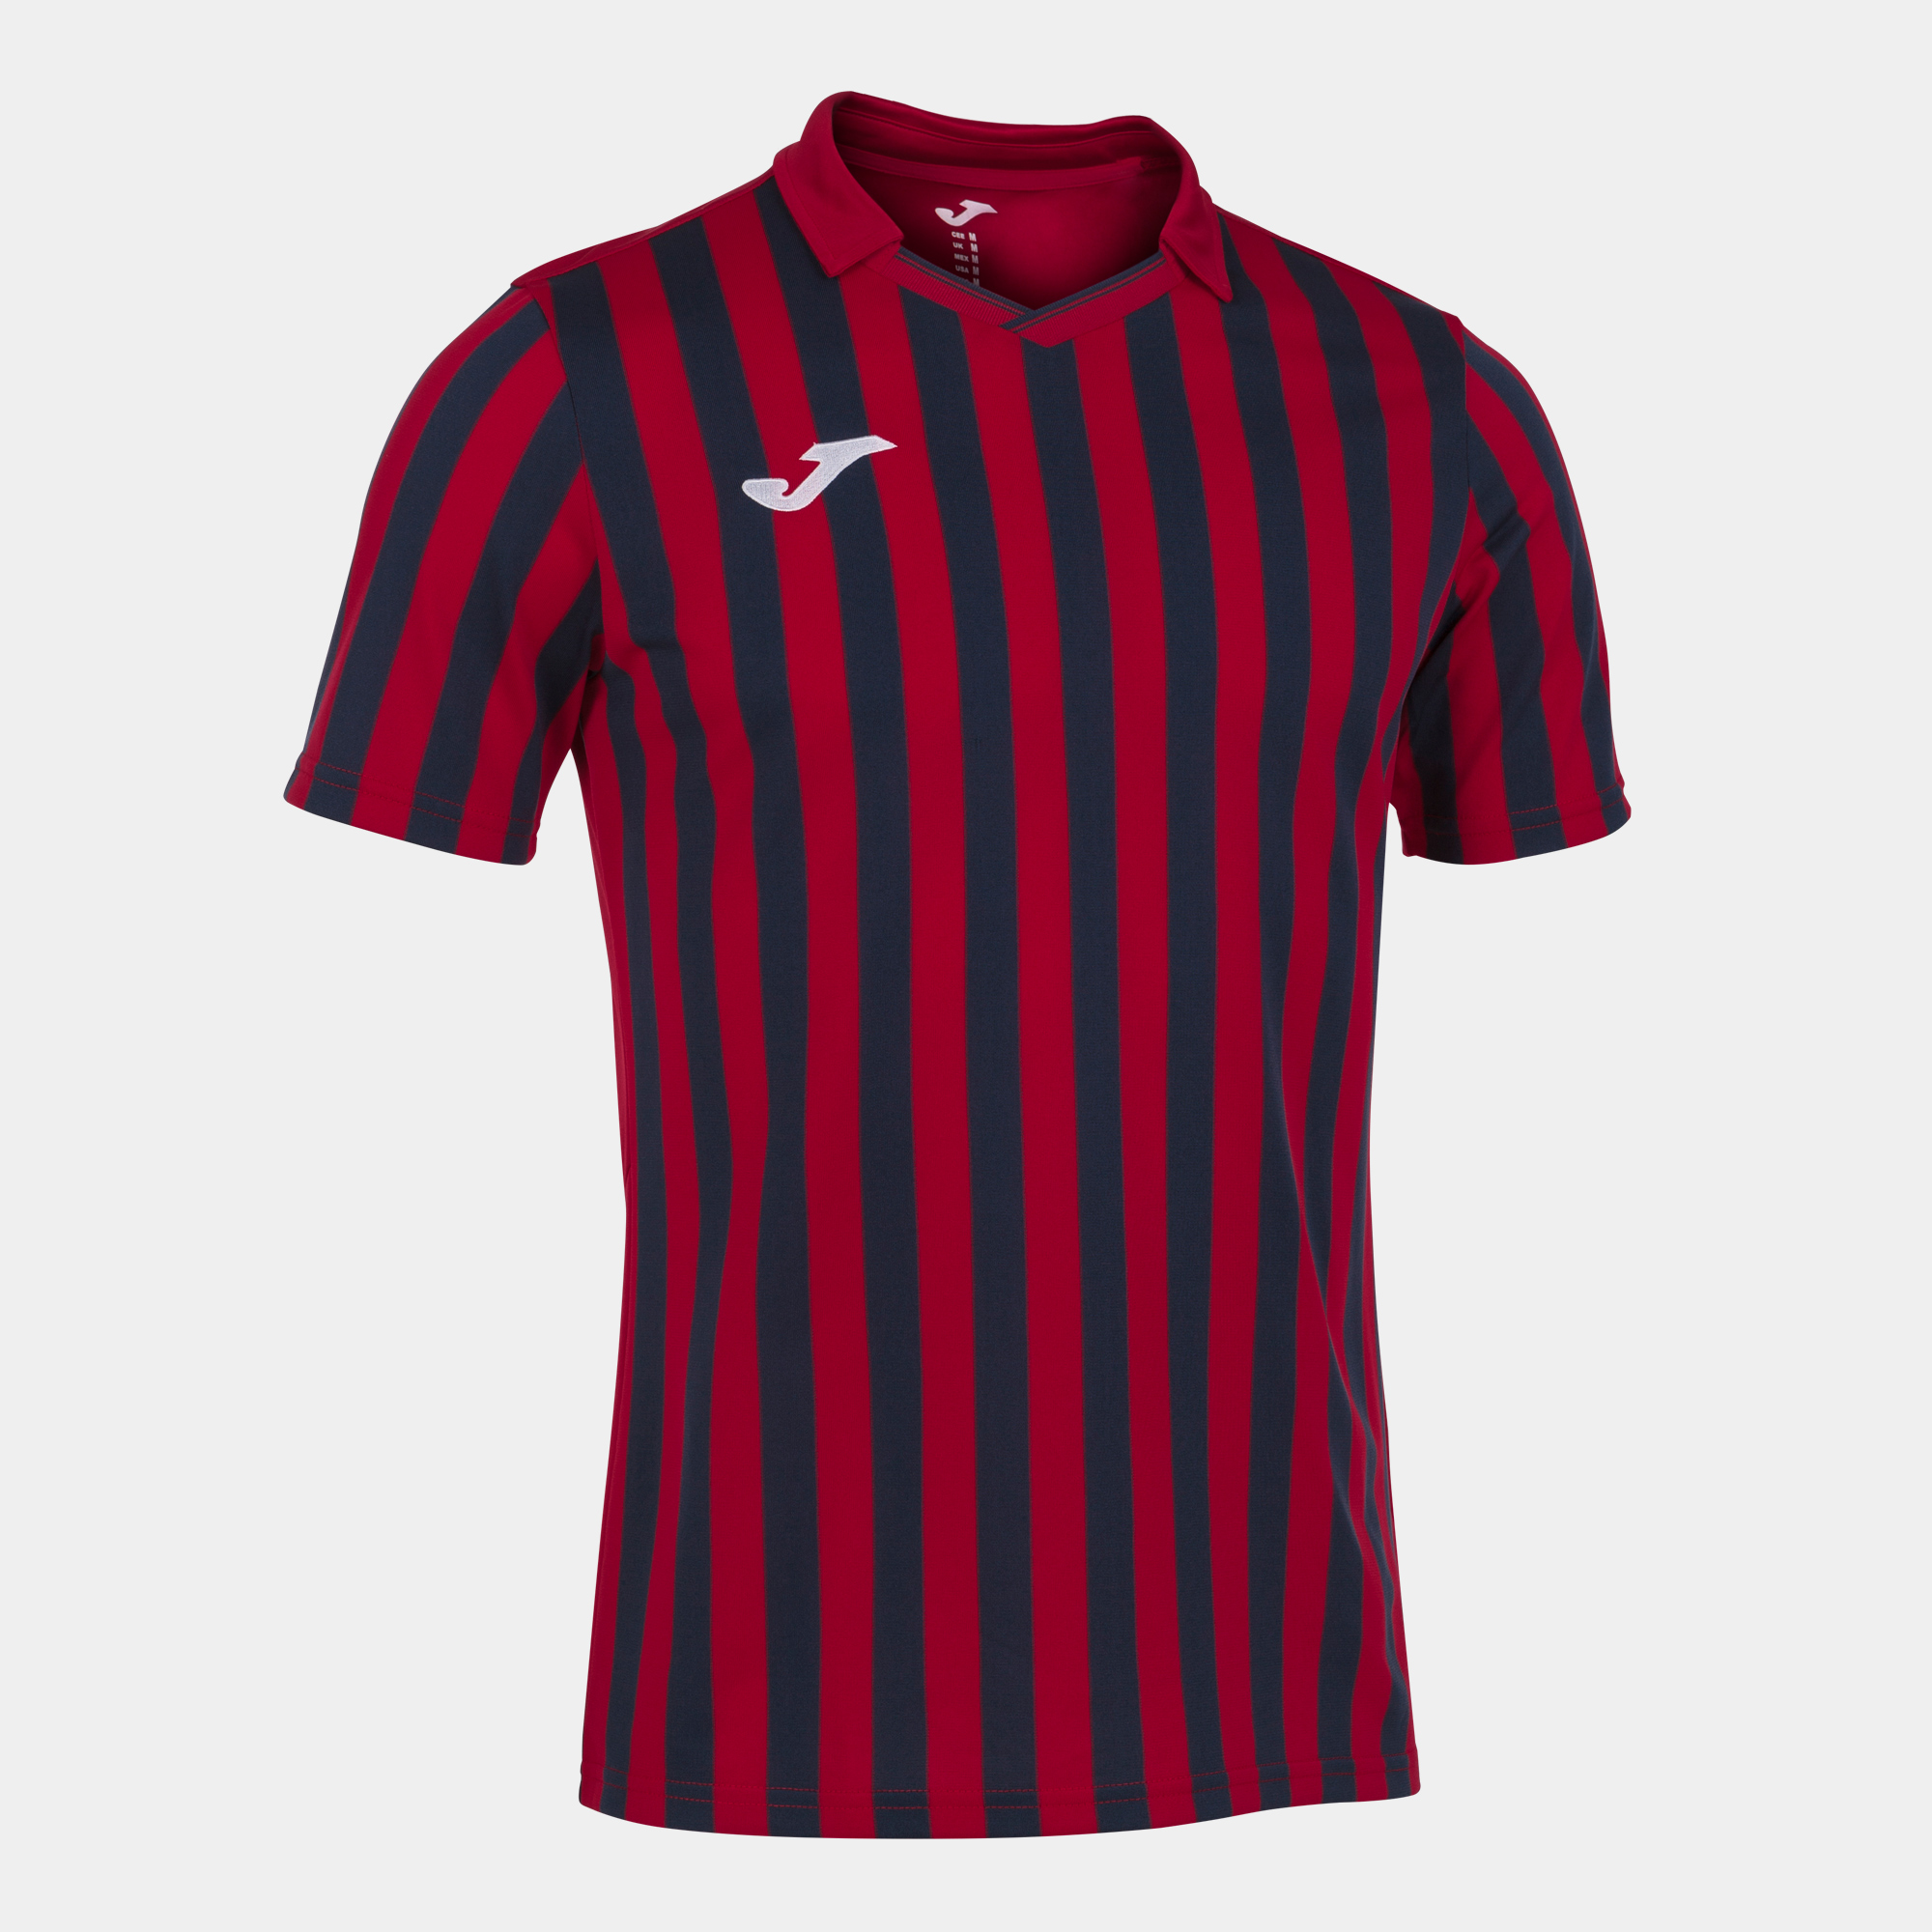 Camiseta Manga Corta Joma Copa Ii Rojo Marino